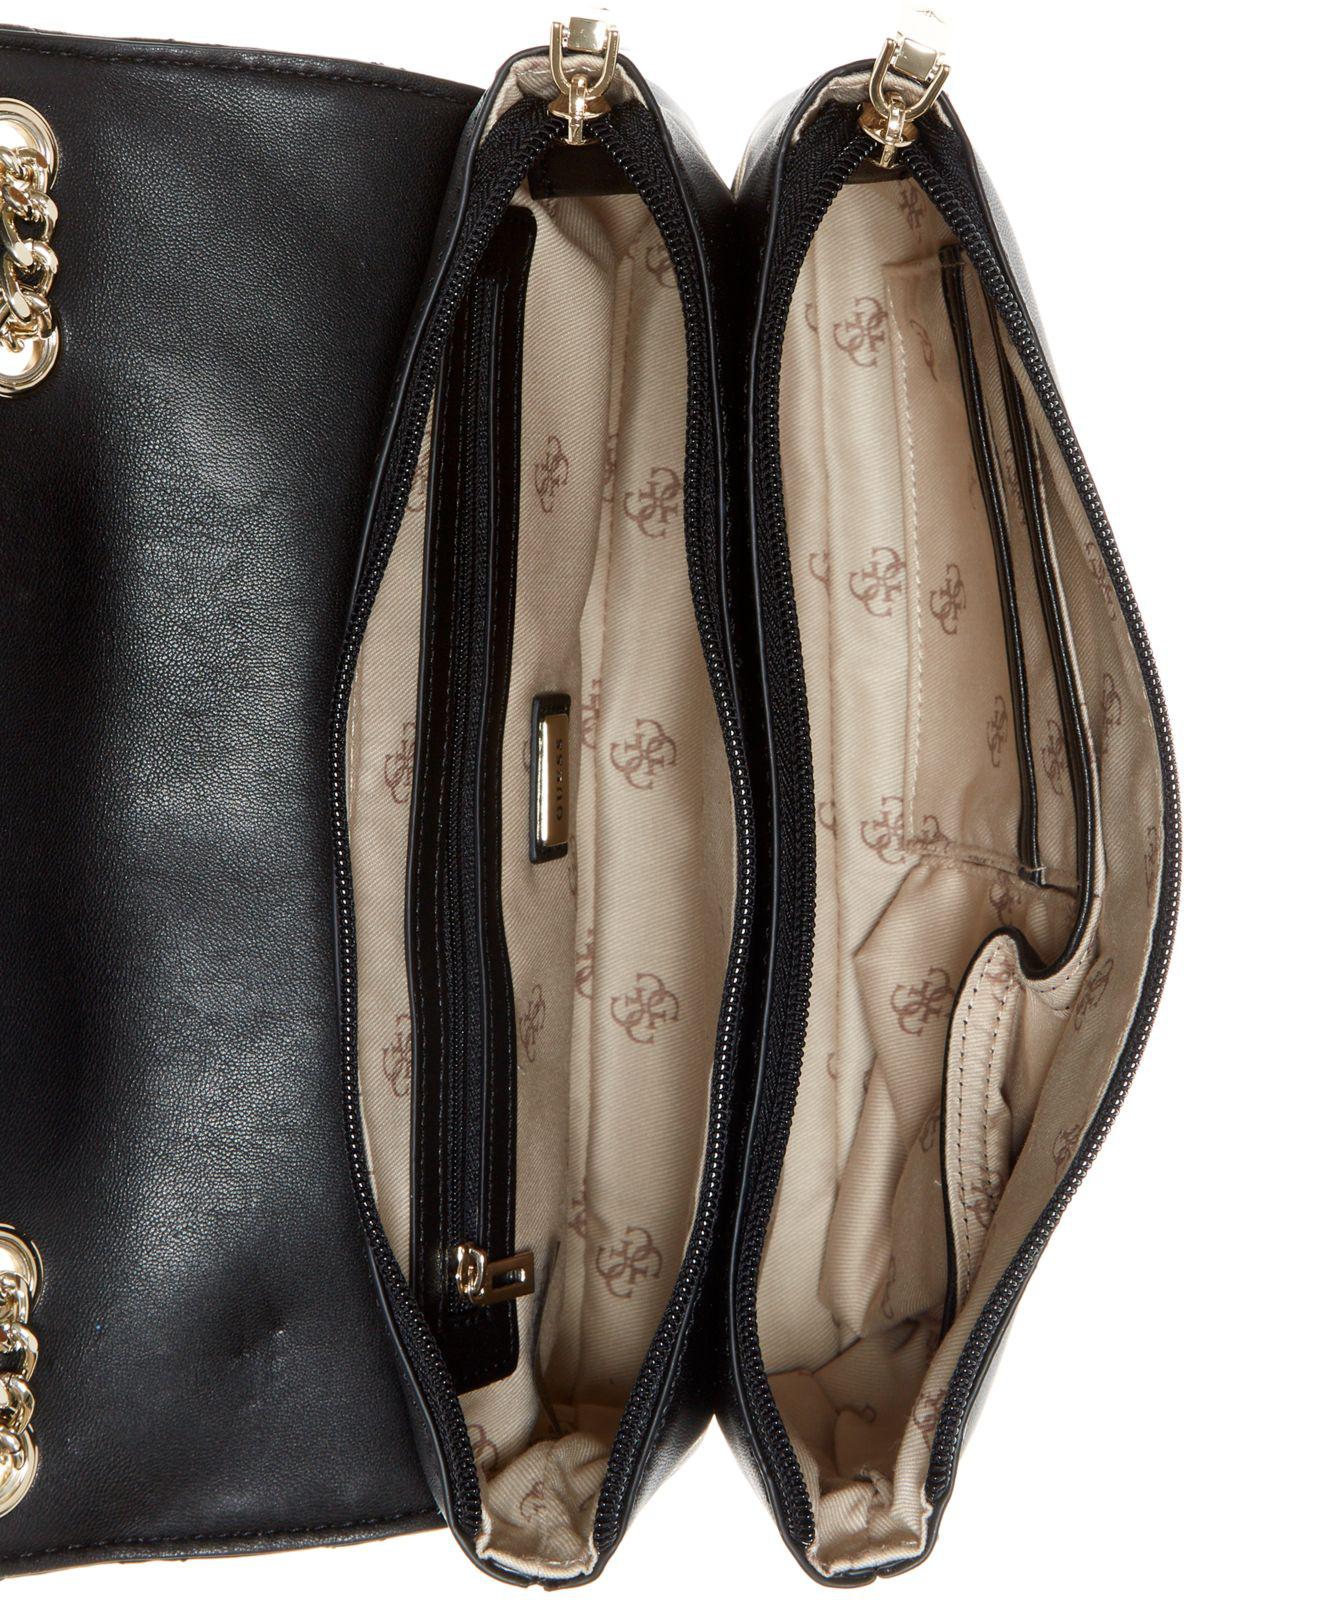 Guess Victoria Chain Shoulder Bag in Black/Gold (Black) - Lyst